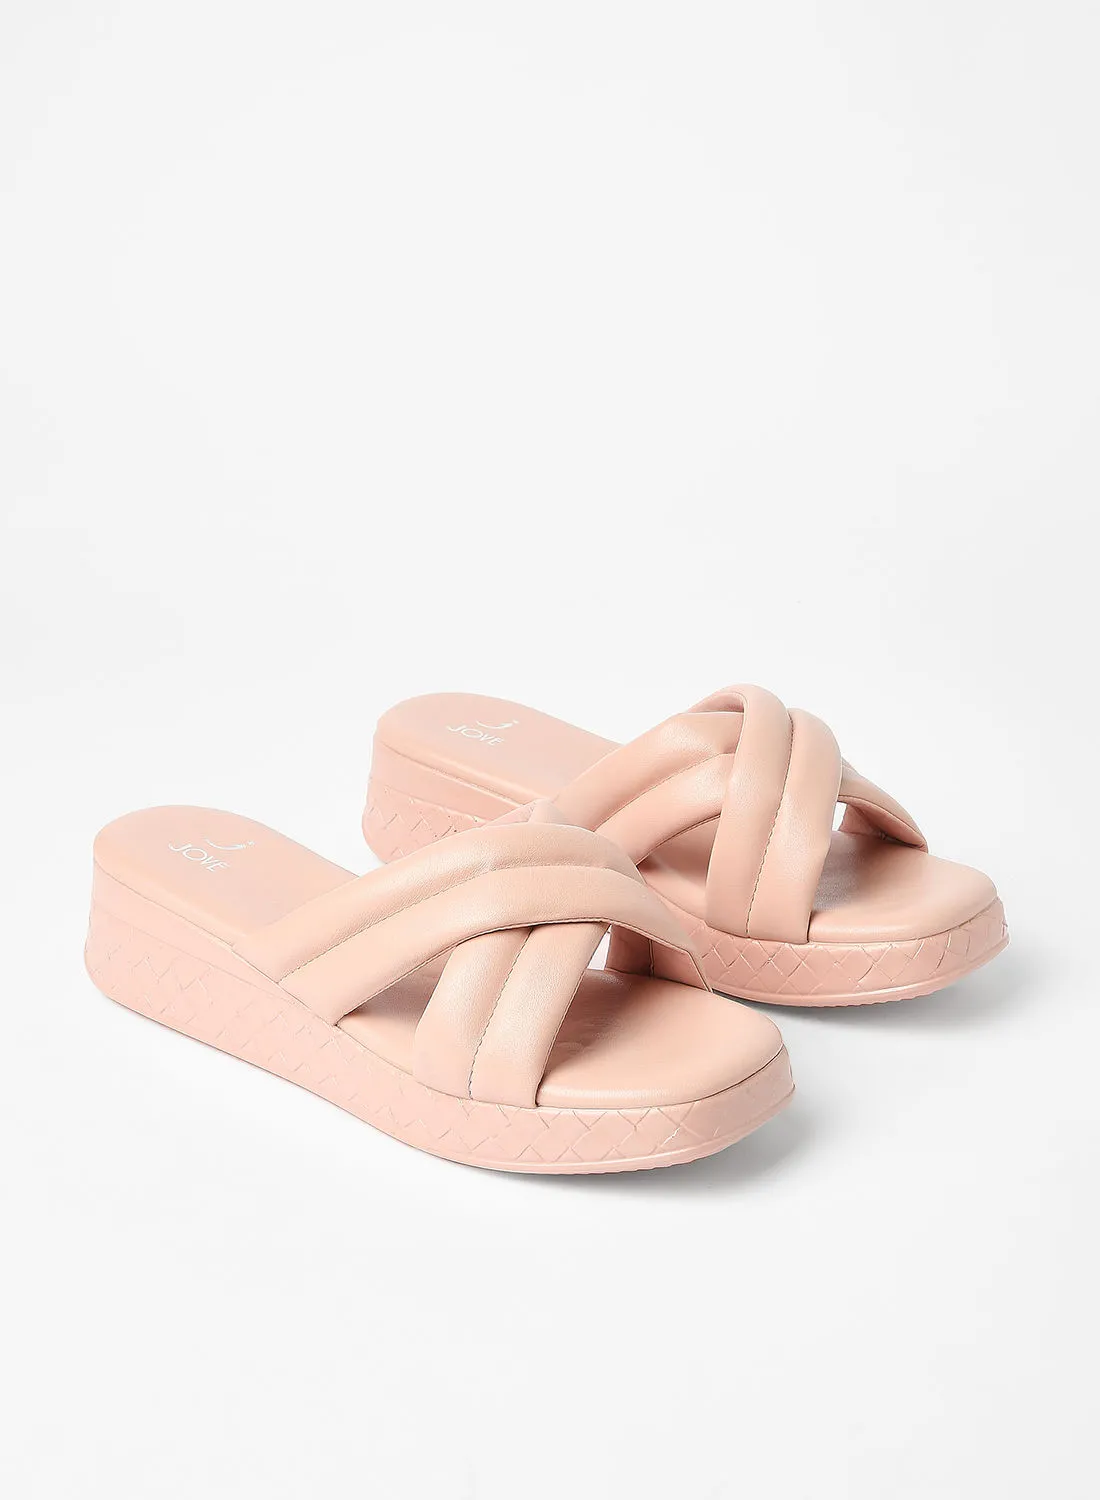 Jove Stylish Comfortable Platform Sandals Pink